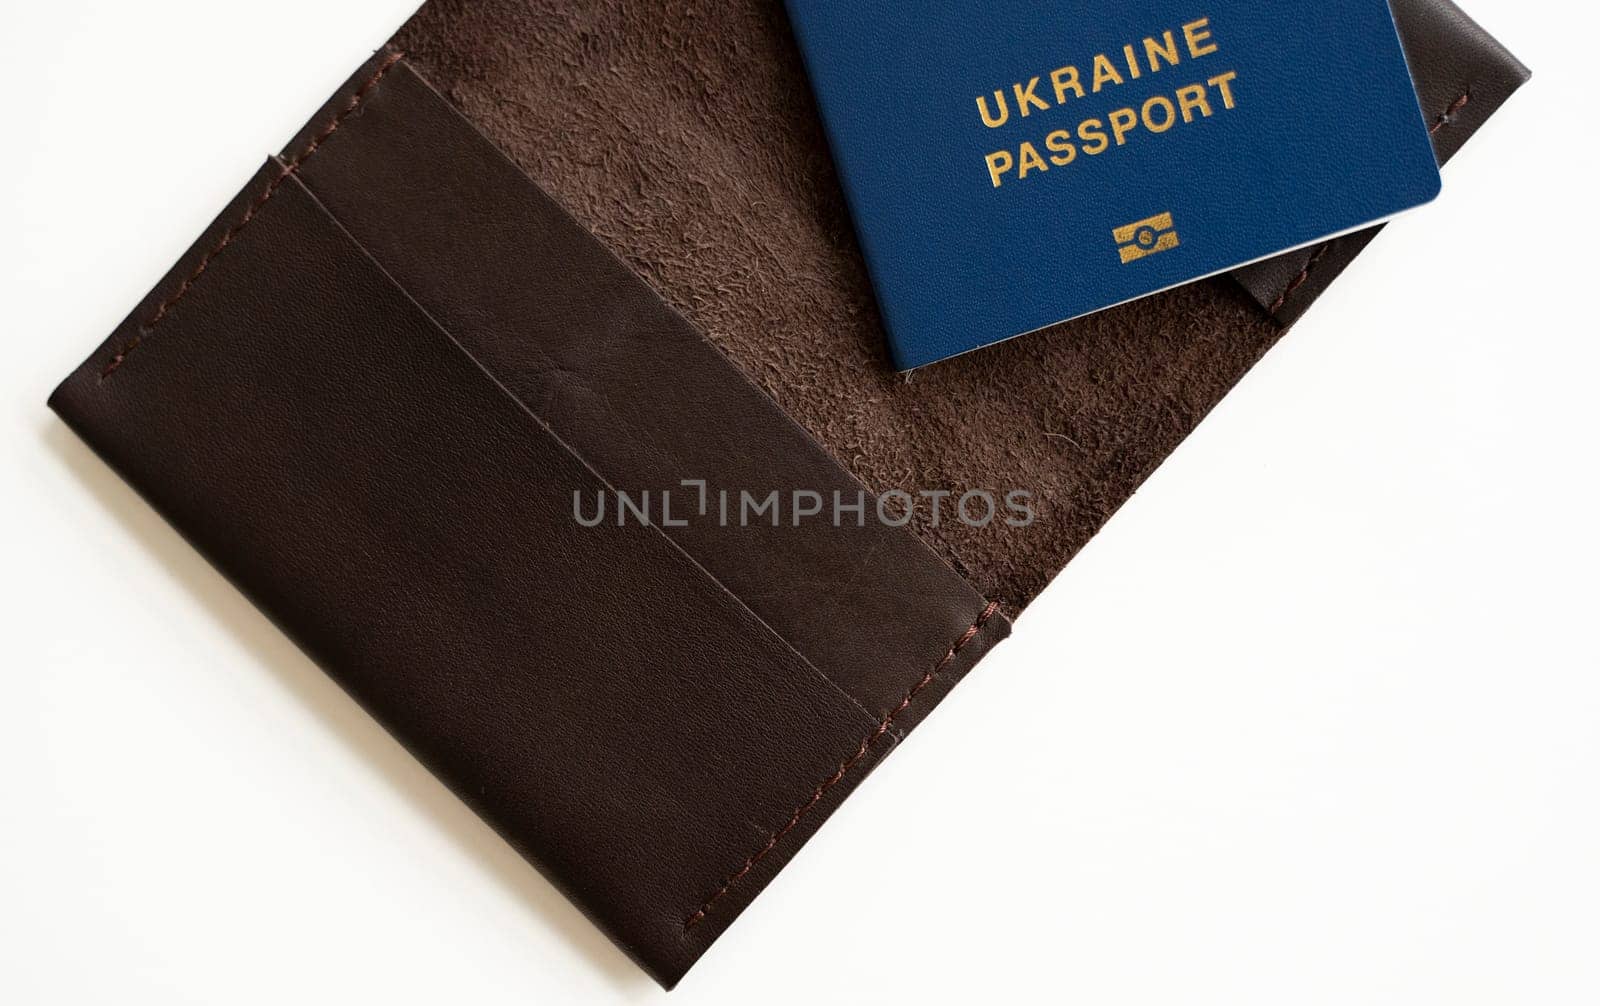 Ukrainian biometric passport id on a leather passport cover to travel the Europe without visas on the table. Inscription in Ukrainian Ukraine Passport